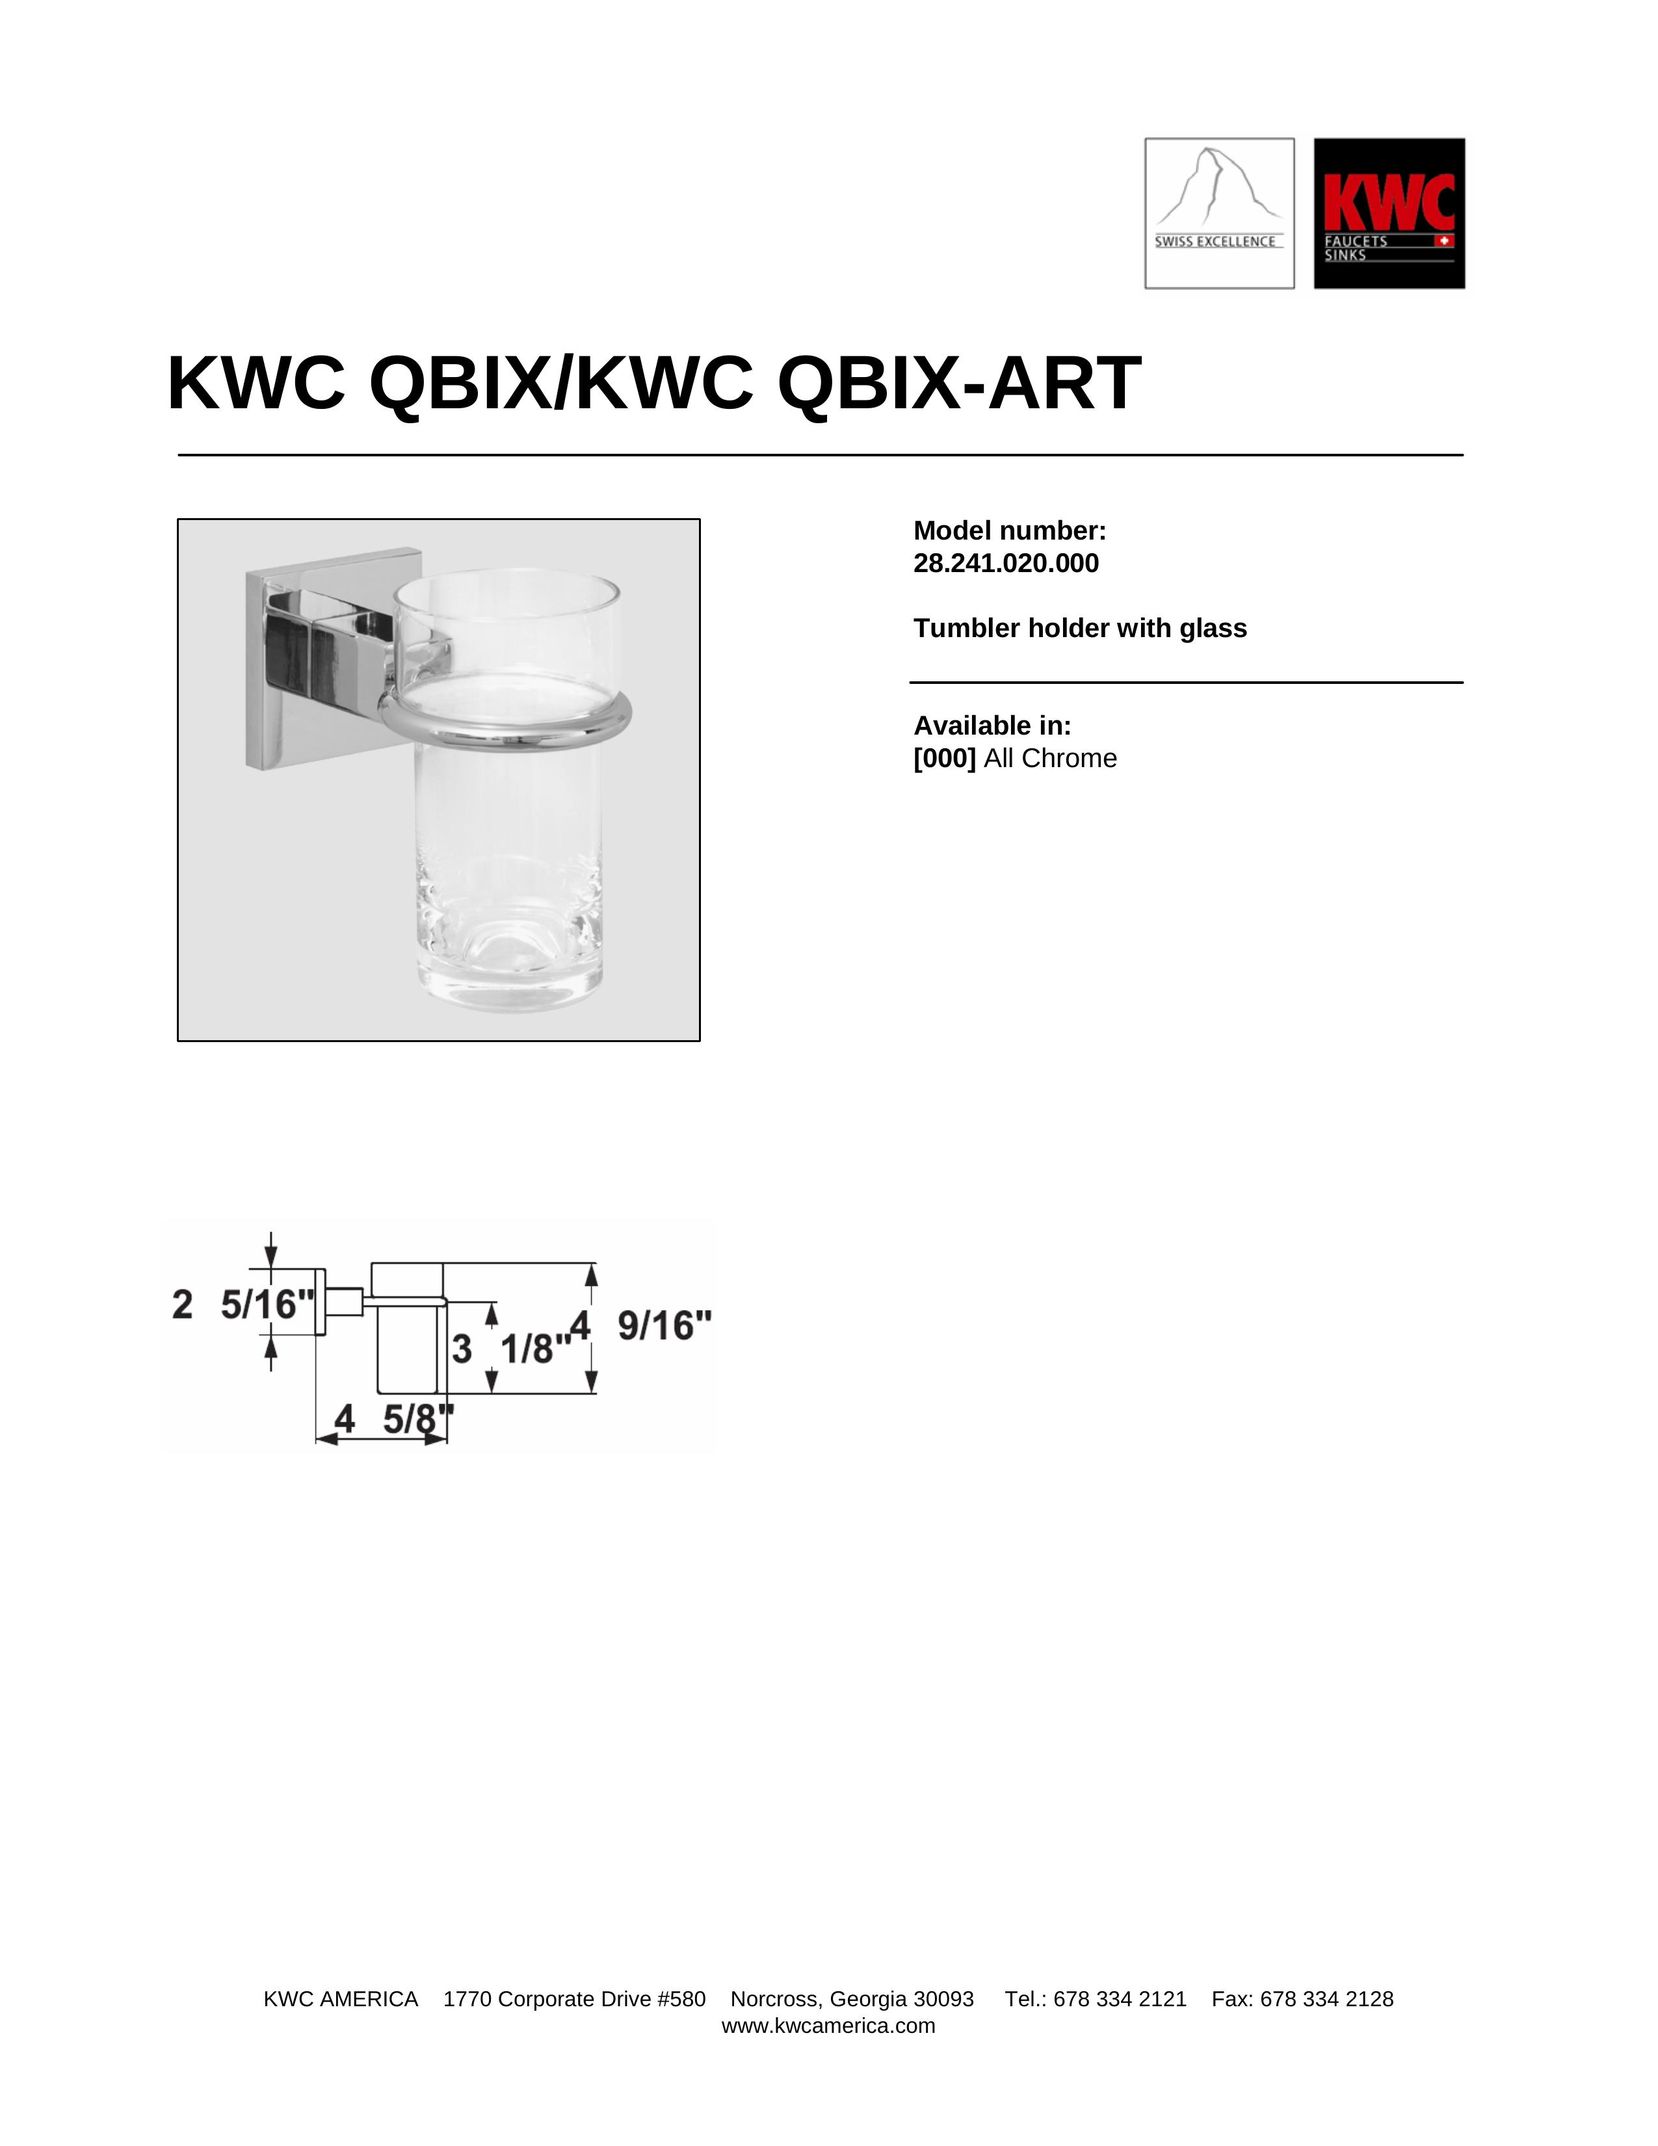 KWC 28.241.020.000 Plumbing Product User Manual